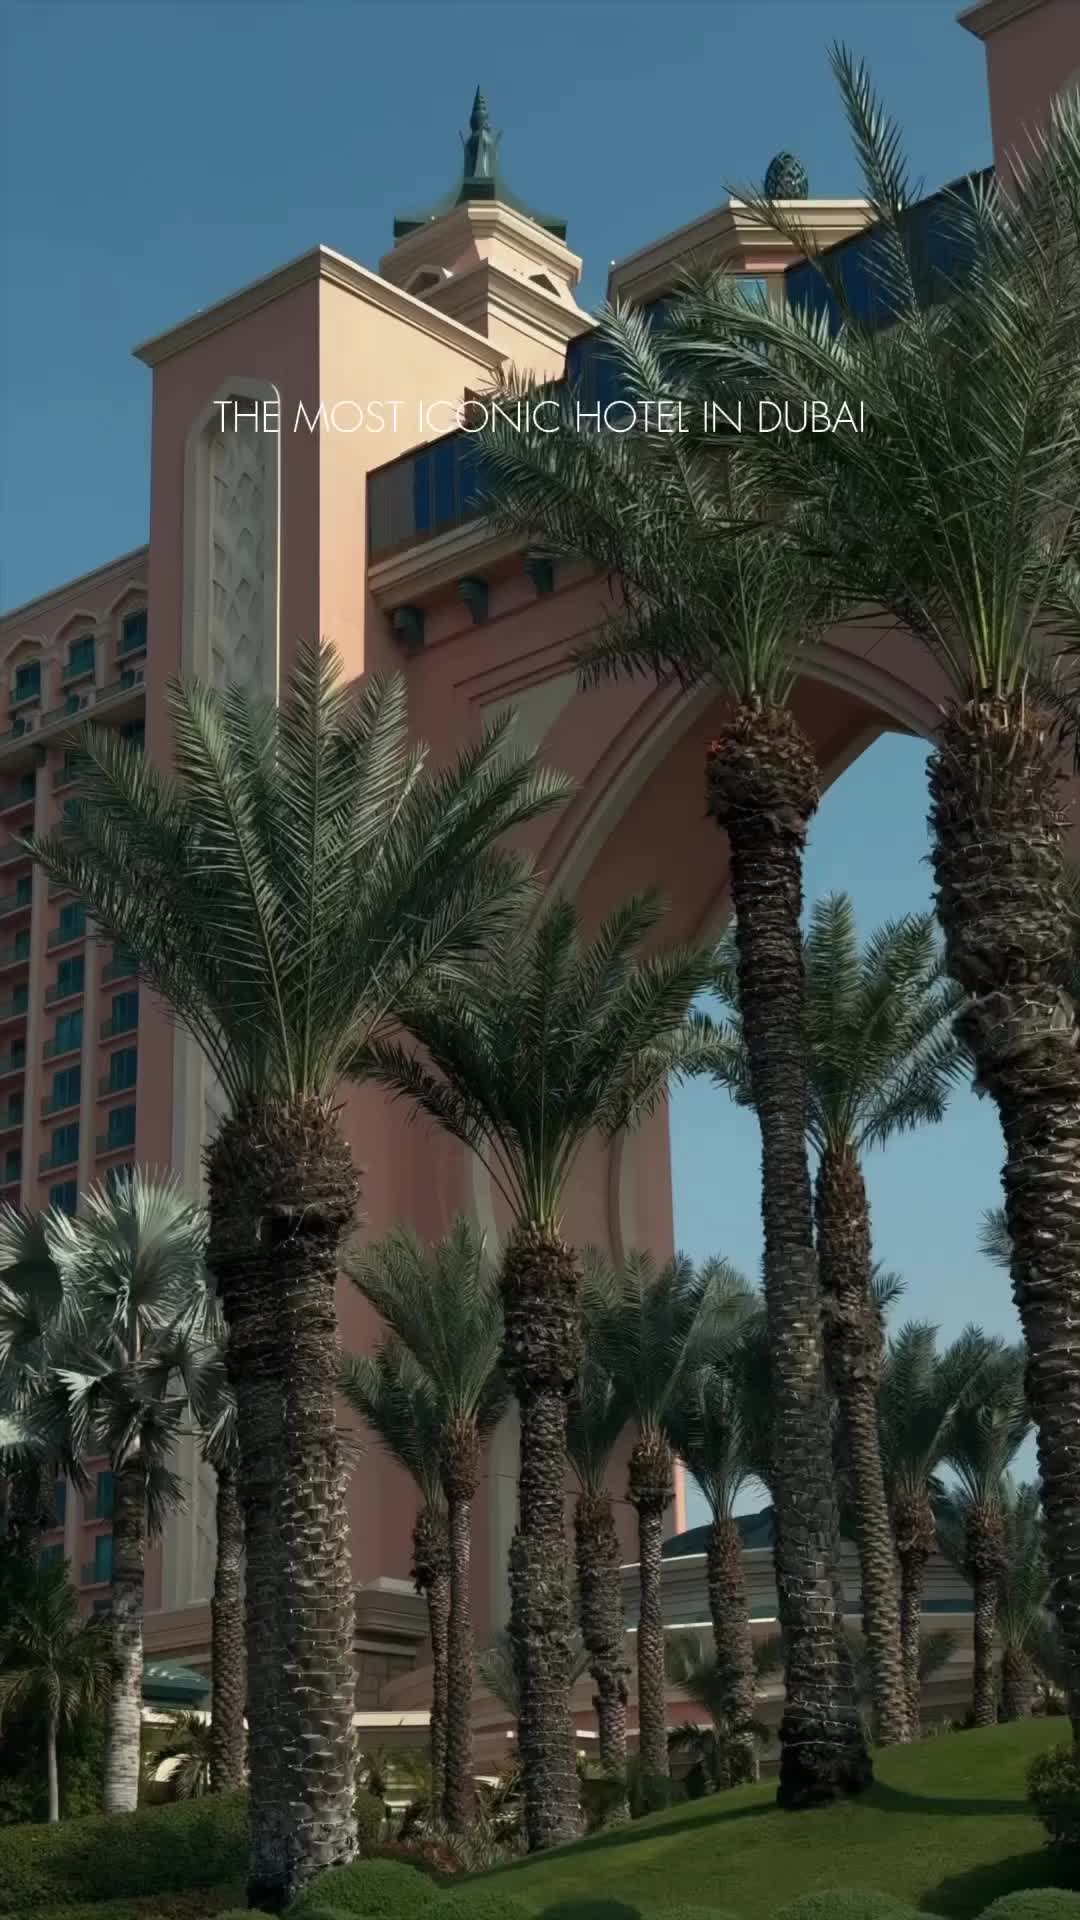 Iconic Atlantis The Palm Hotel in Dubai Awaits You